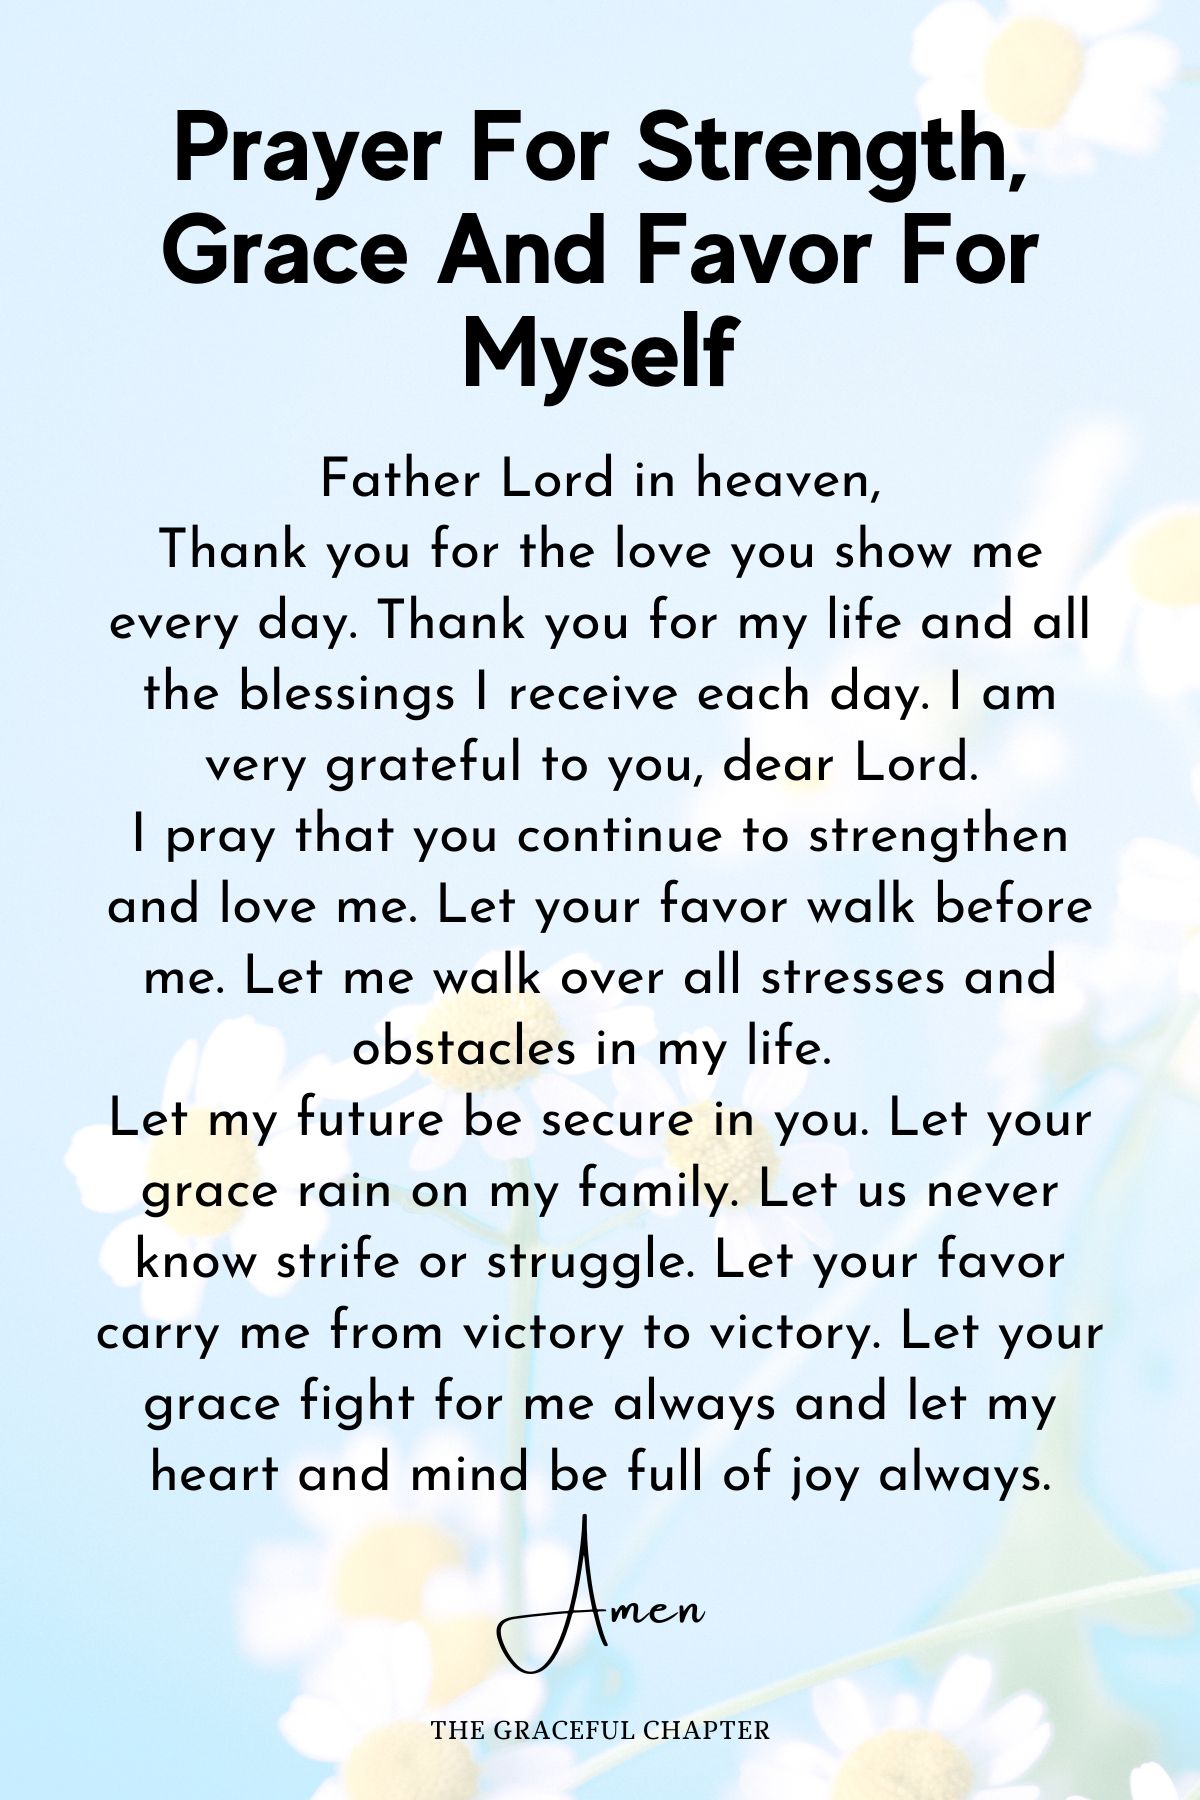 Prayer for strength, grace, and favor for myself - prayers for myself